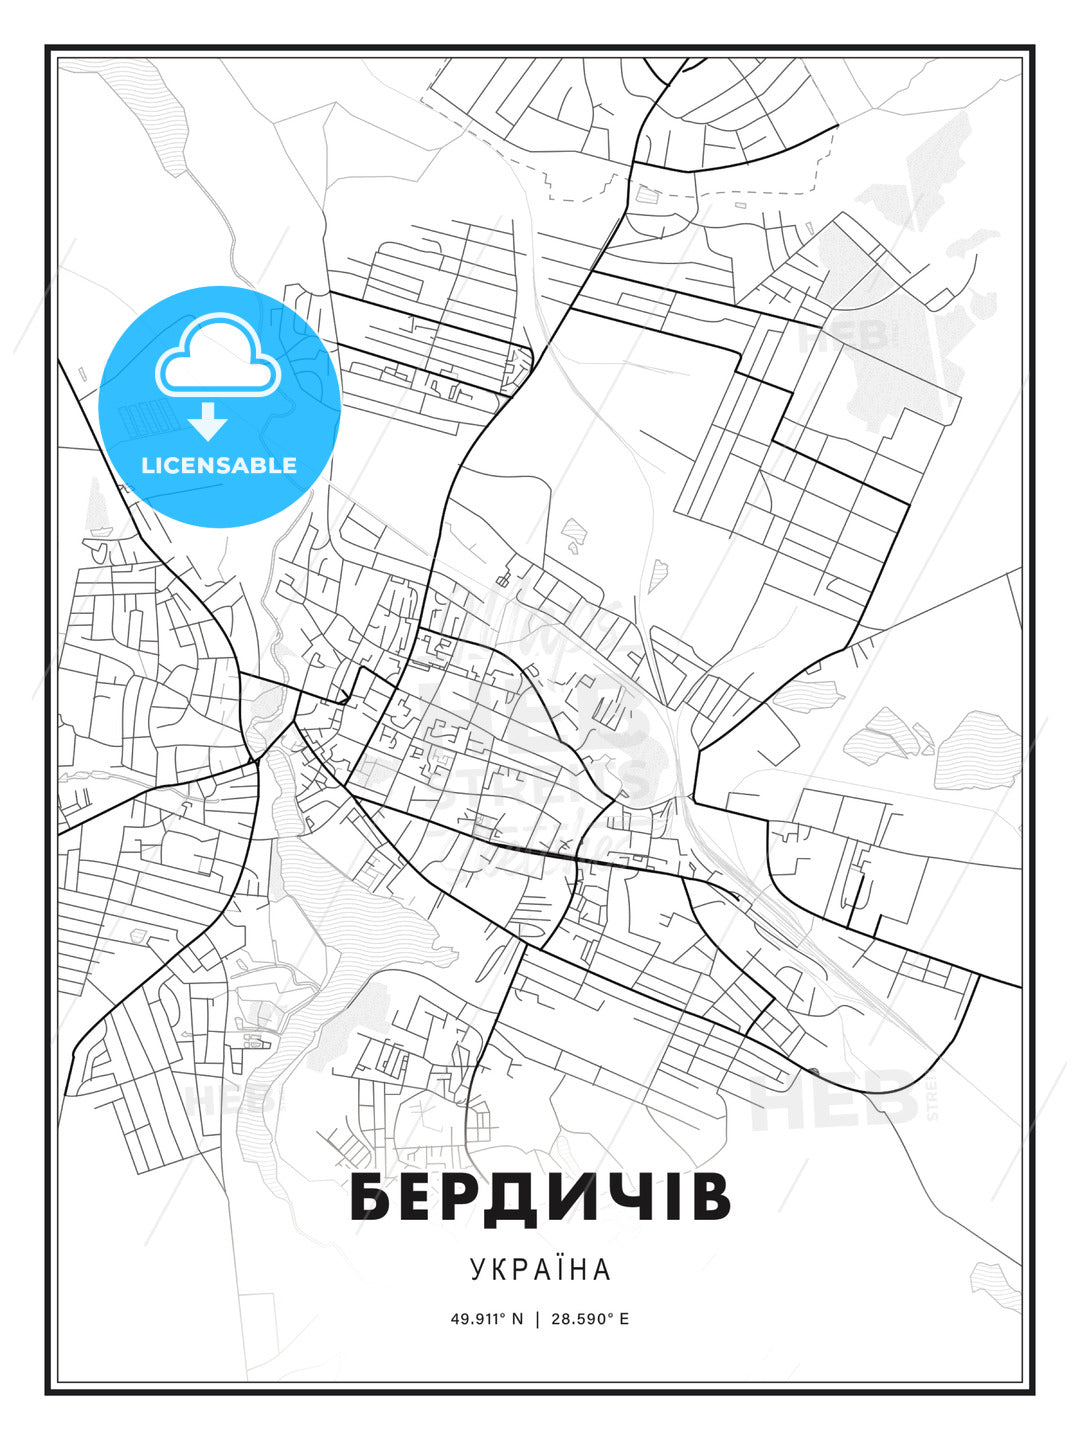 БЕРДИЧІВ / Berdychiv, Ukraine, Modern Print Template in Various Formats - HEBSTREITS Sketches